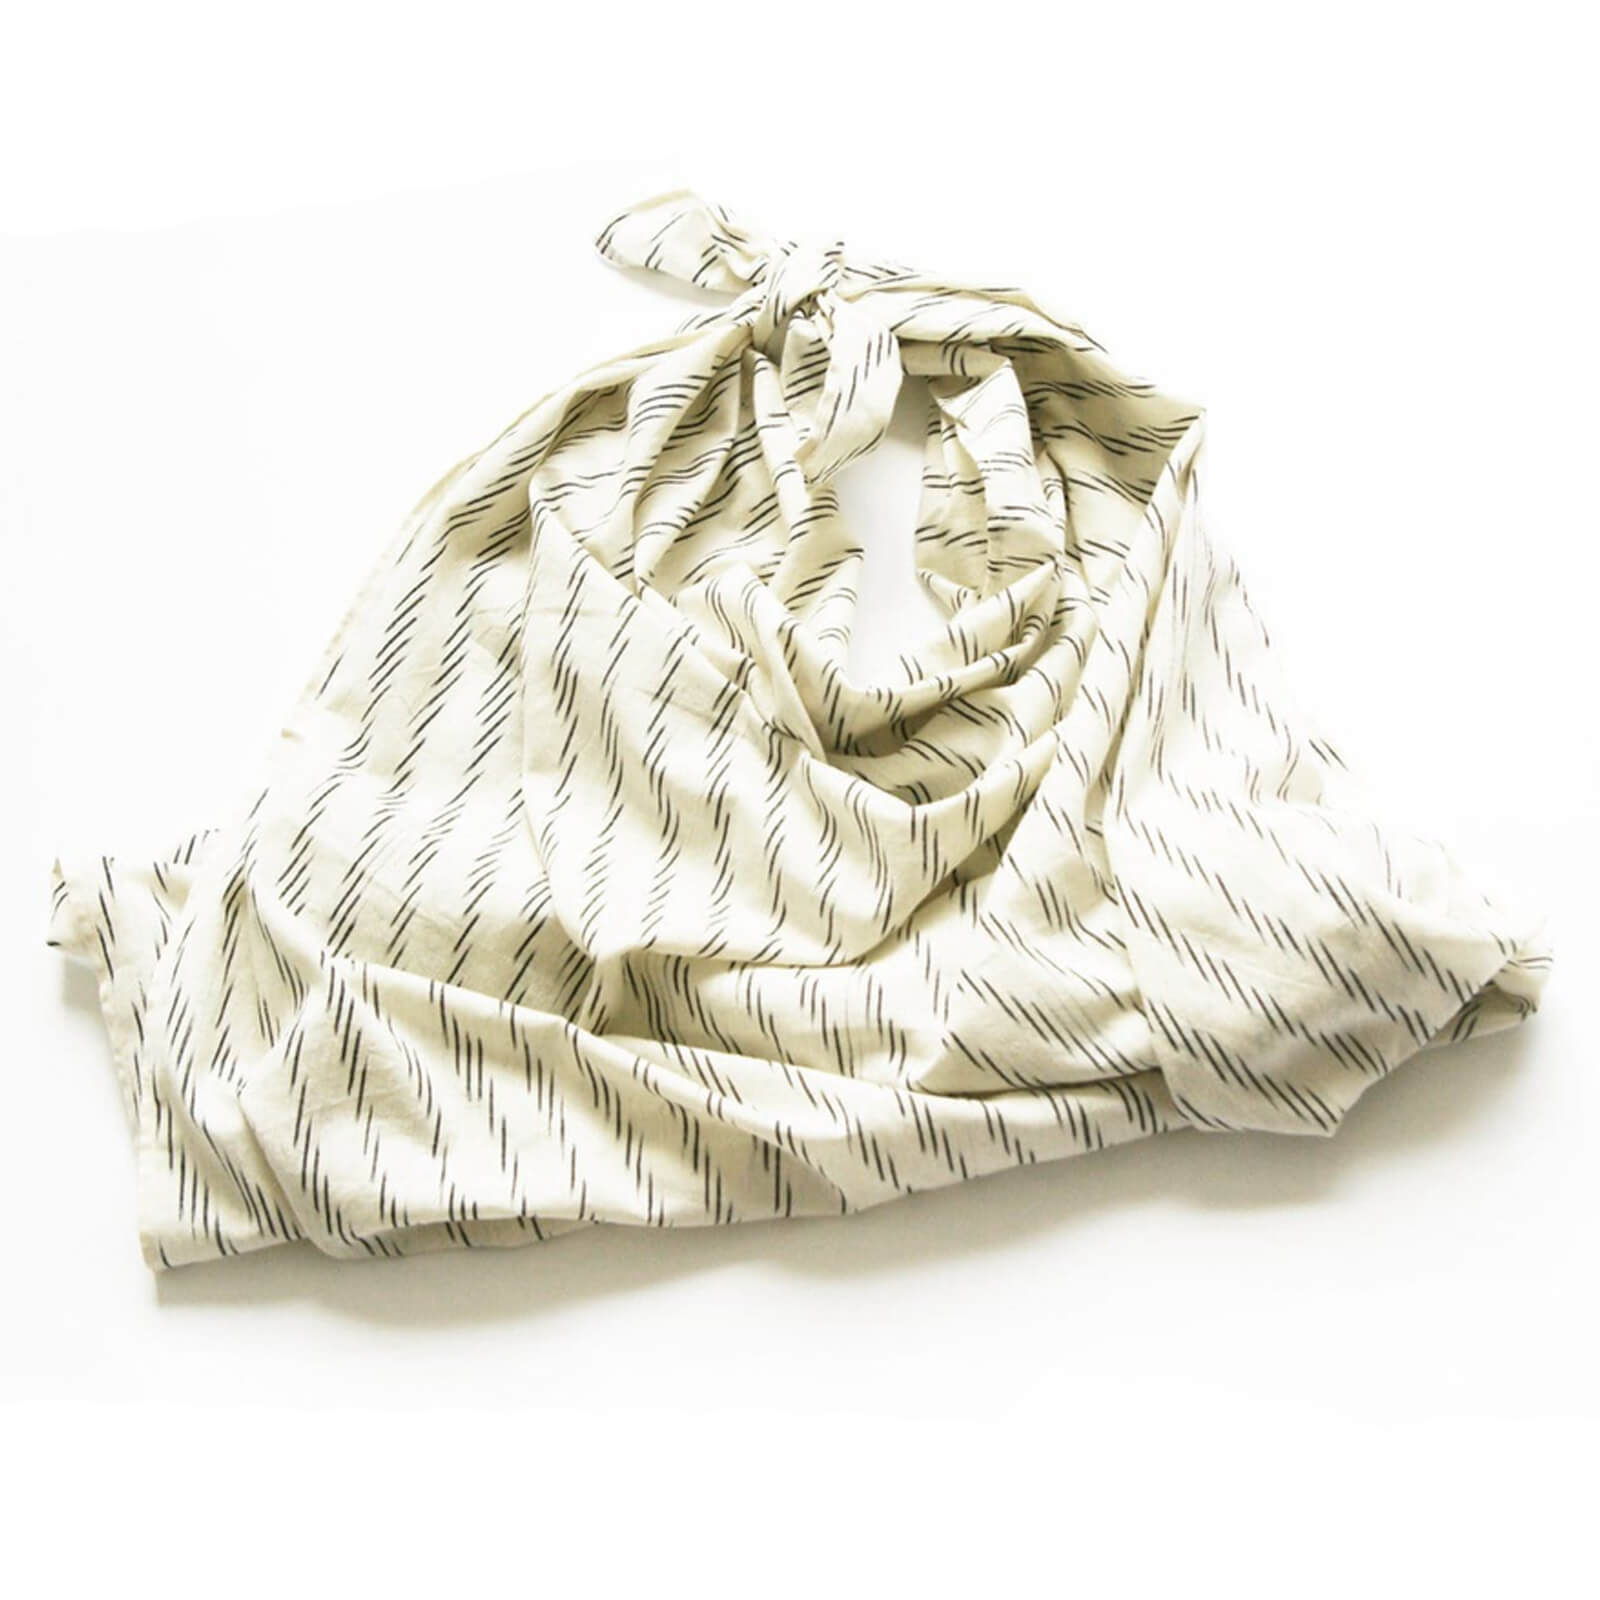 Handmade Cotton Ikat Swaddle Blanket - White and Black Zebra Stripe